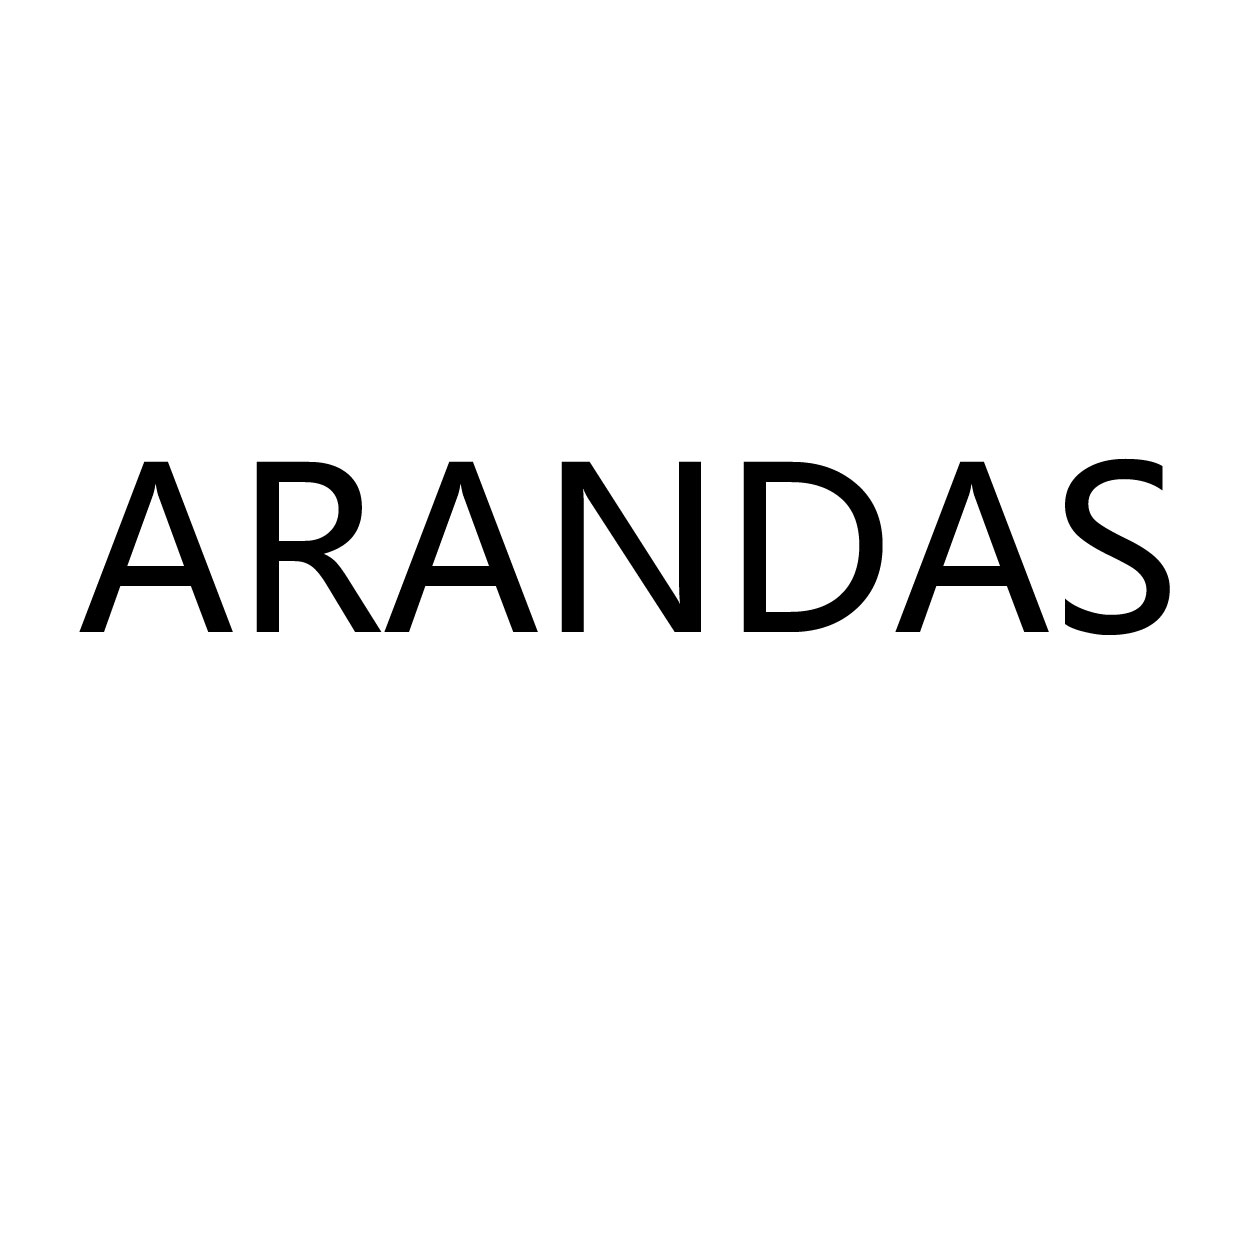 ARANDAS